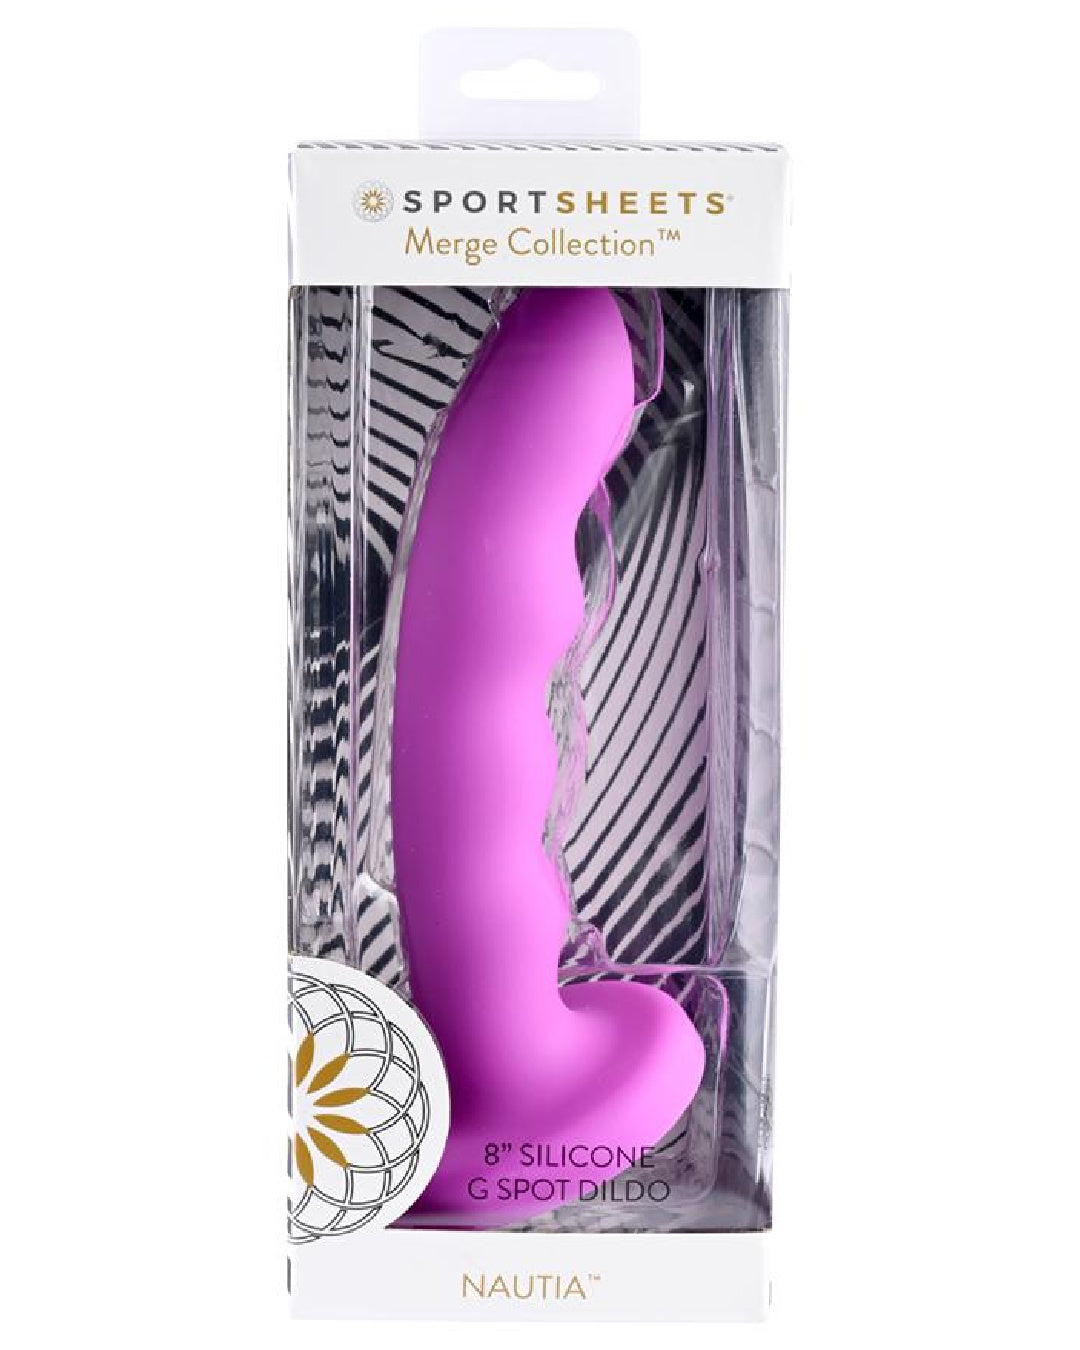 Sportsheets Nautia 8" Silicone G-Spot & Prostate Dildo - Pink in the box